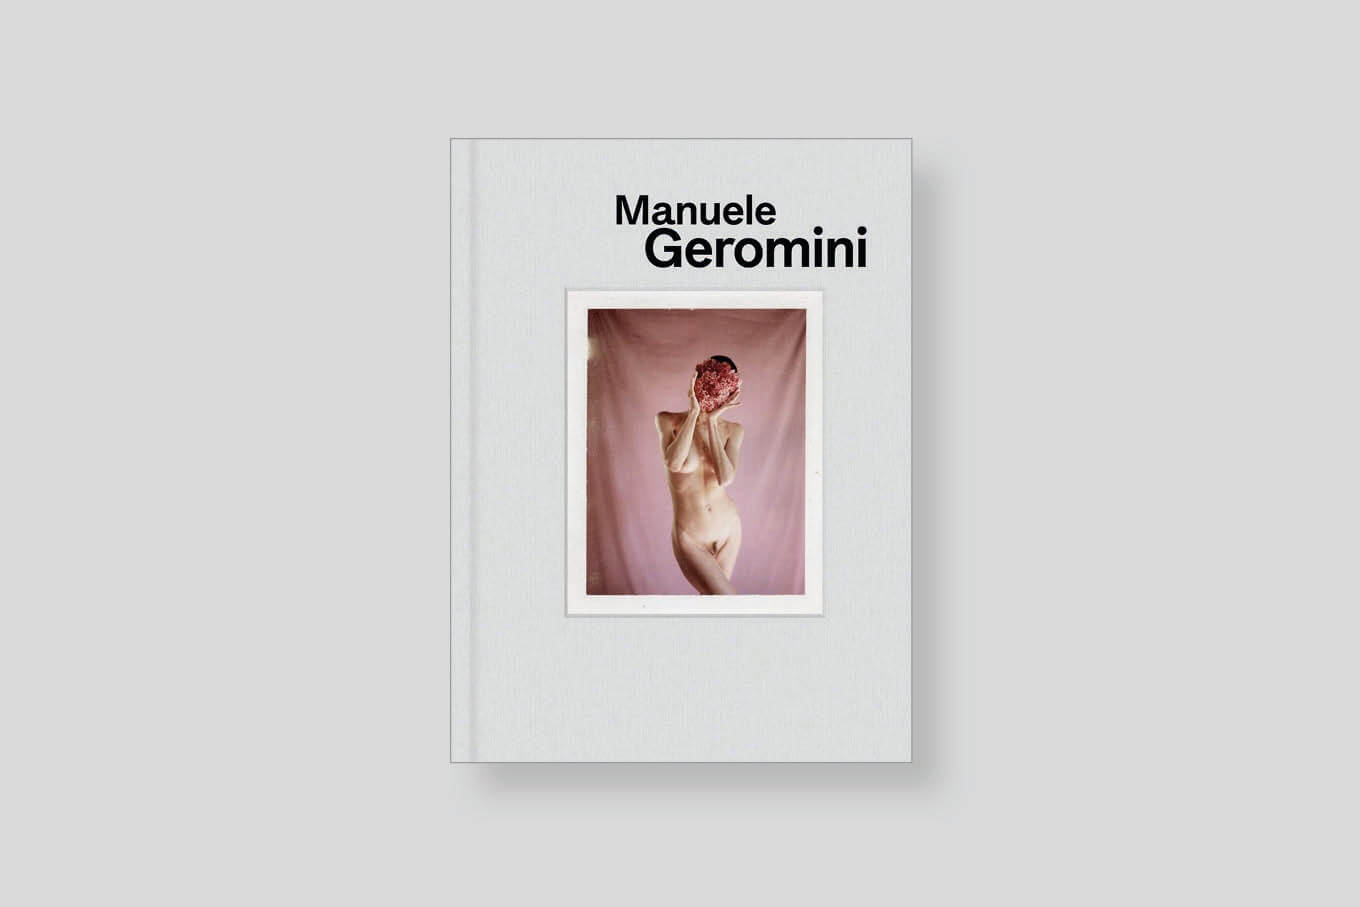 manuele-geromini-editions-notari-book-cover